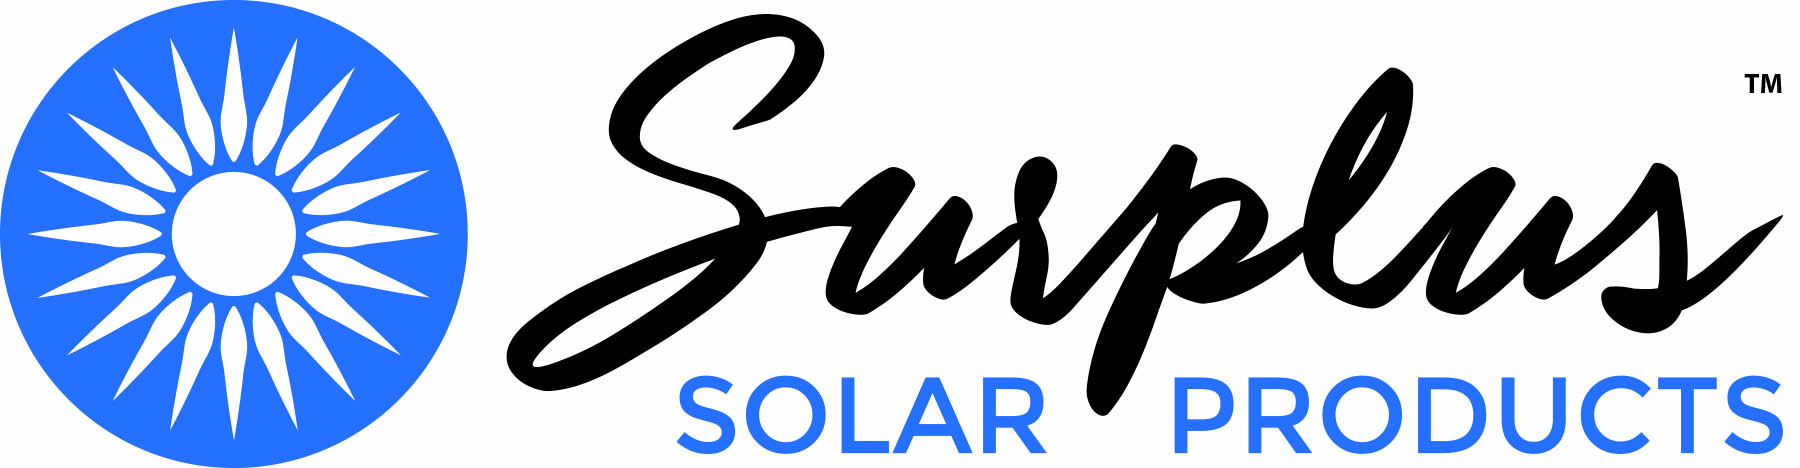 Surplus Solar Products logo